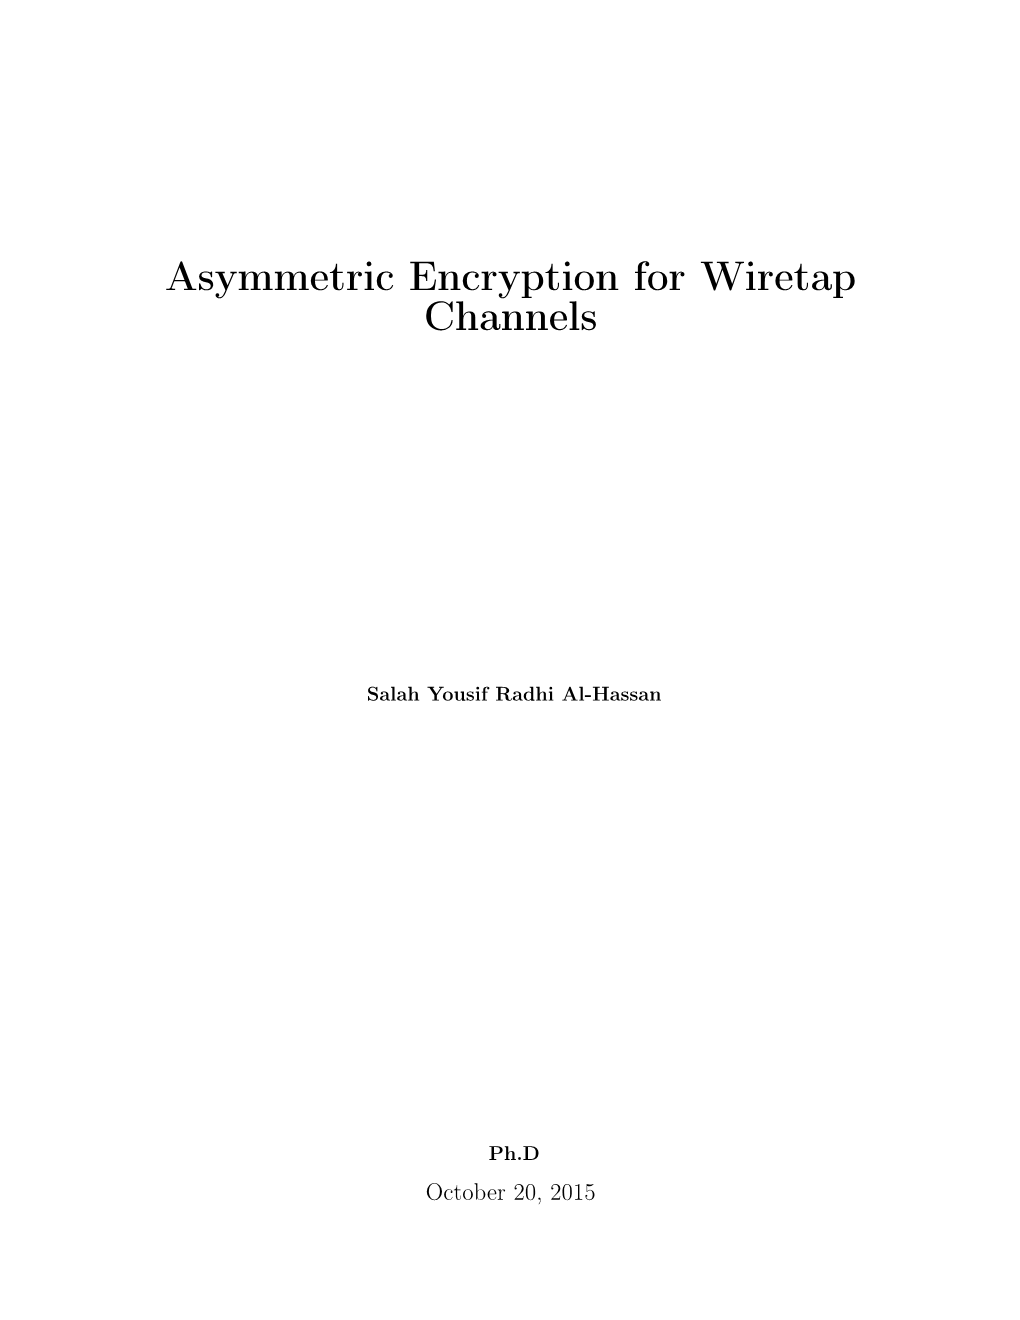 Asymmetric Encryption for Wiretap Channels